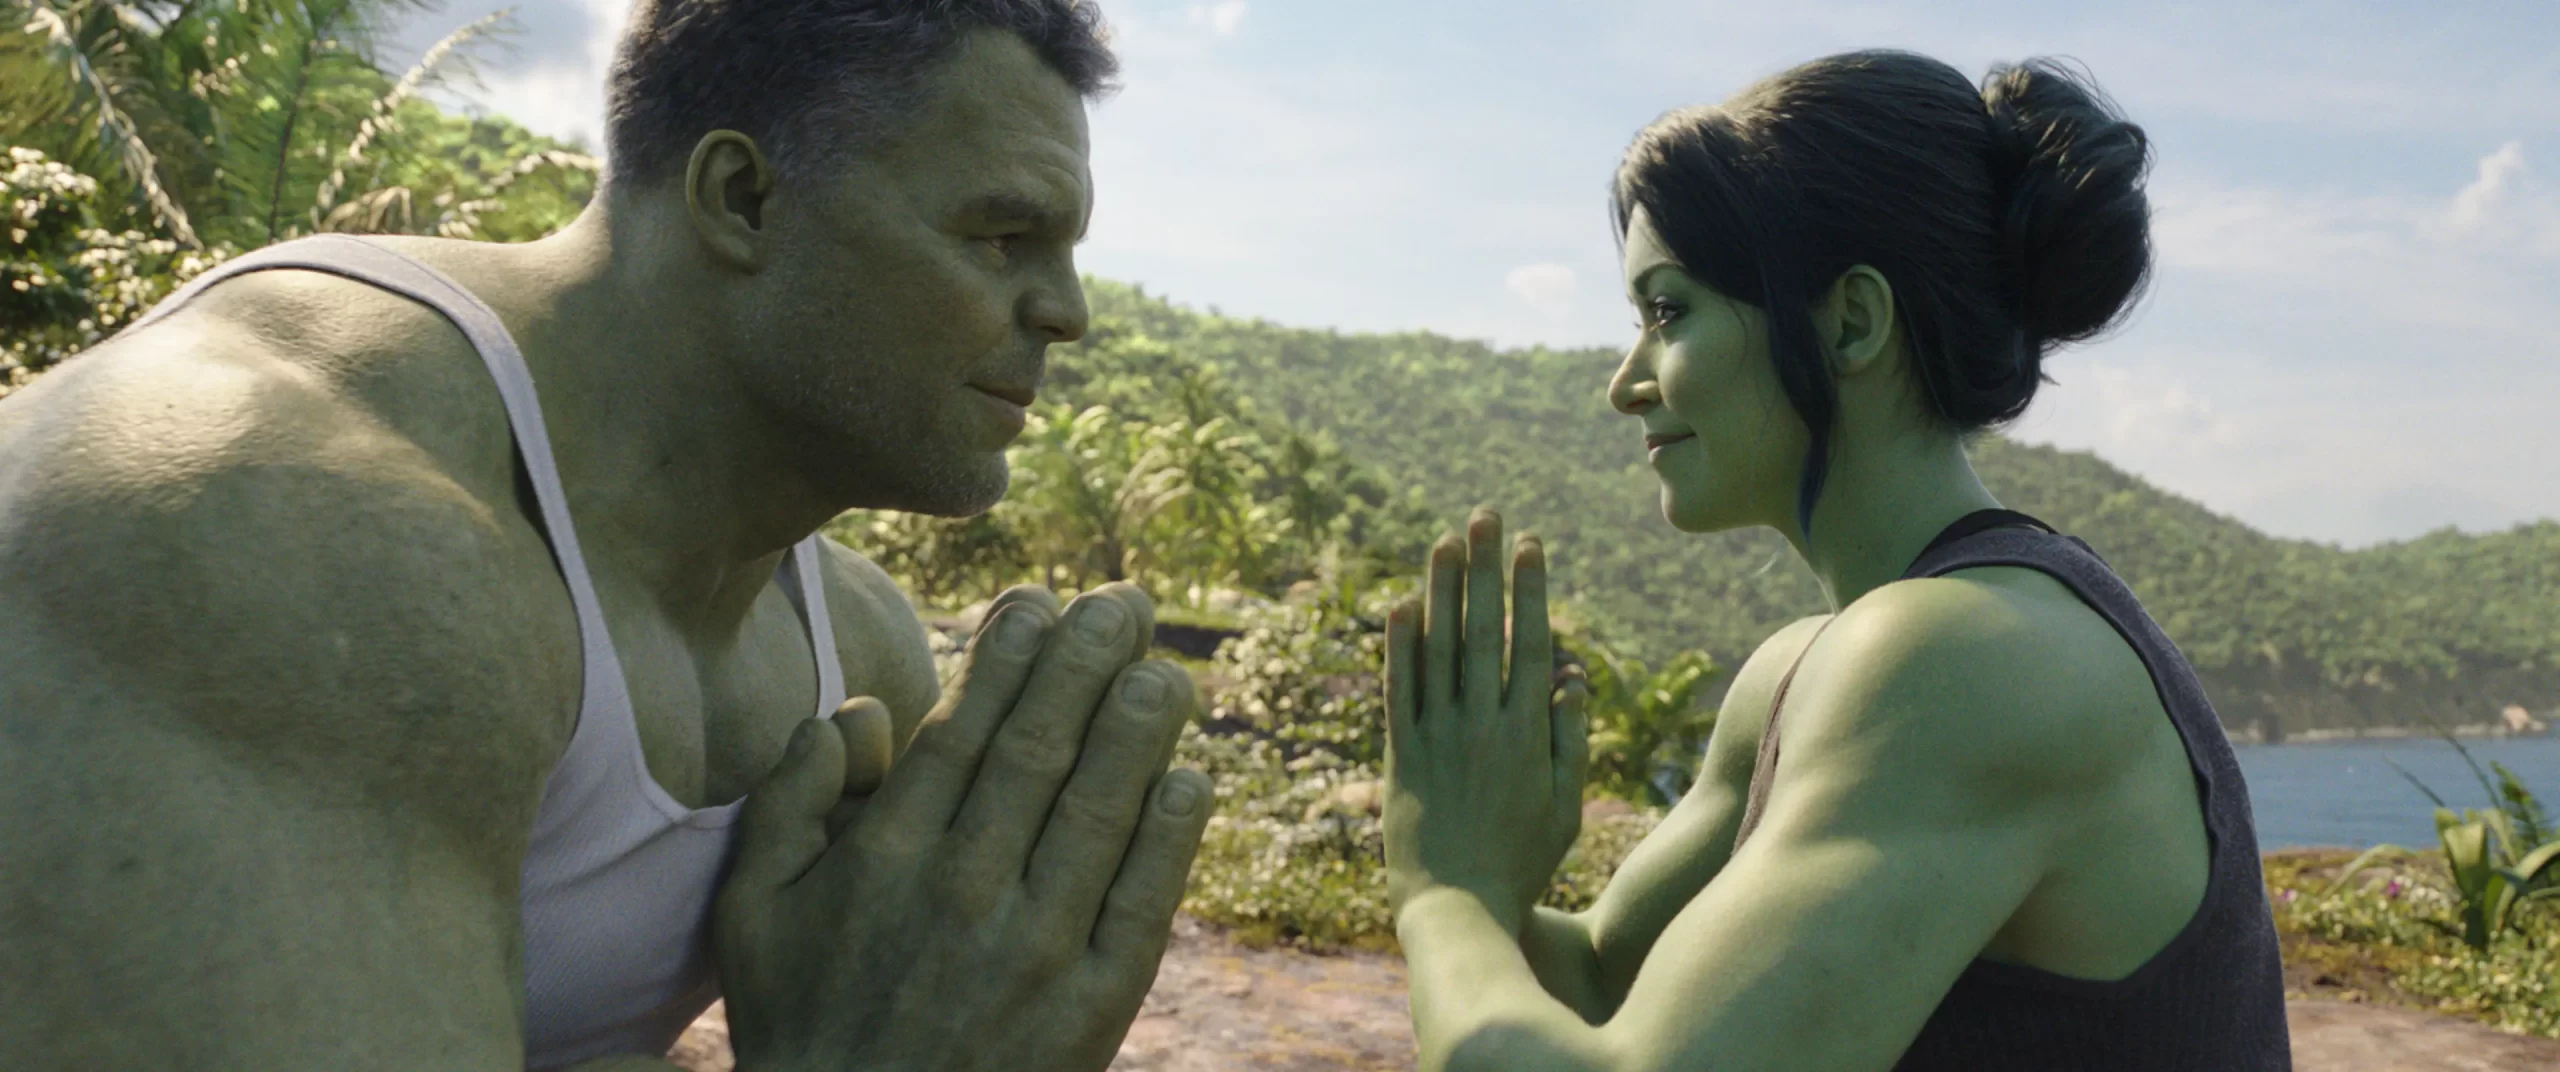 An image of She-Hulk and the Hulk